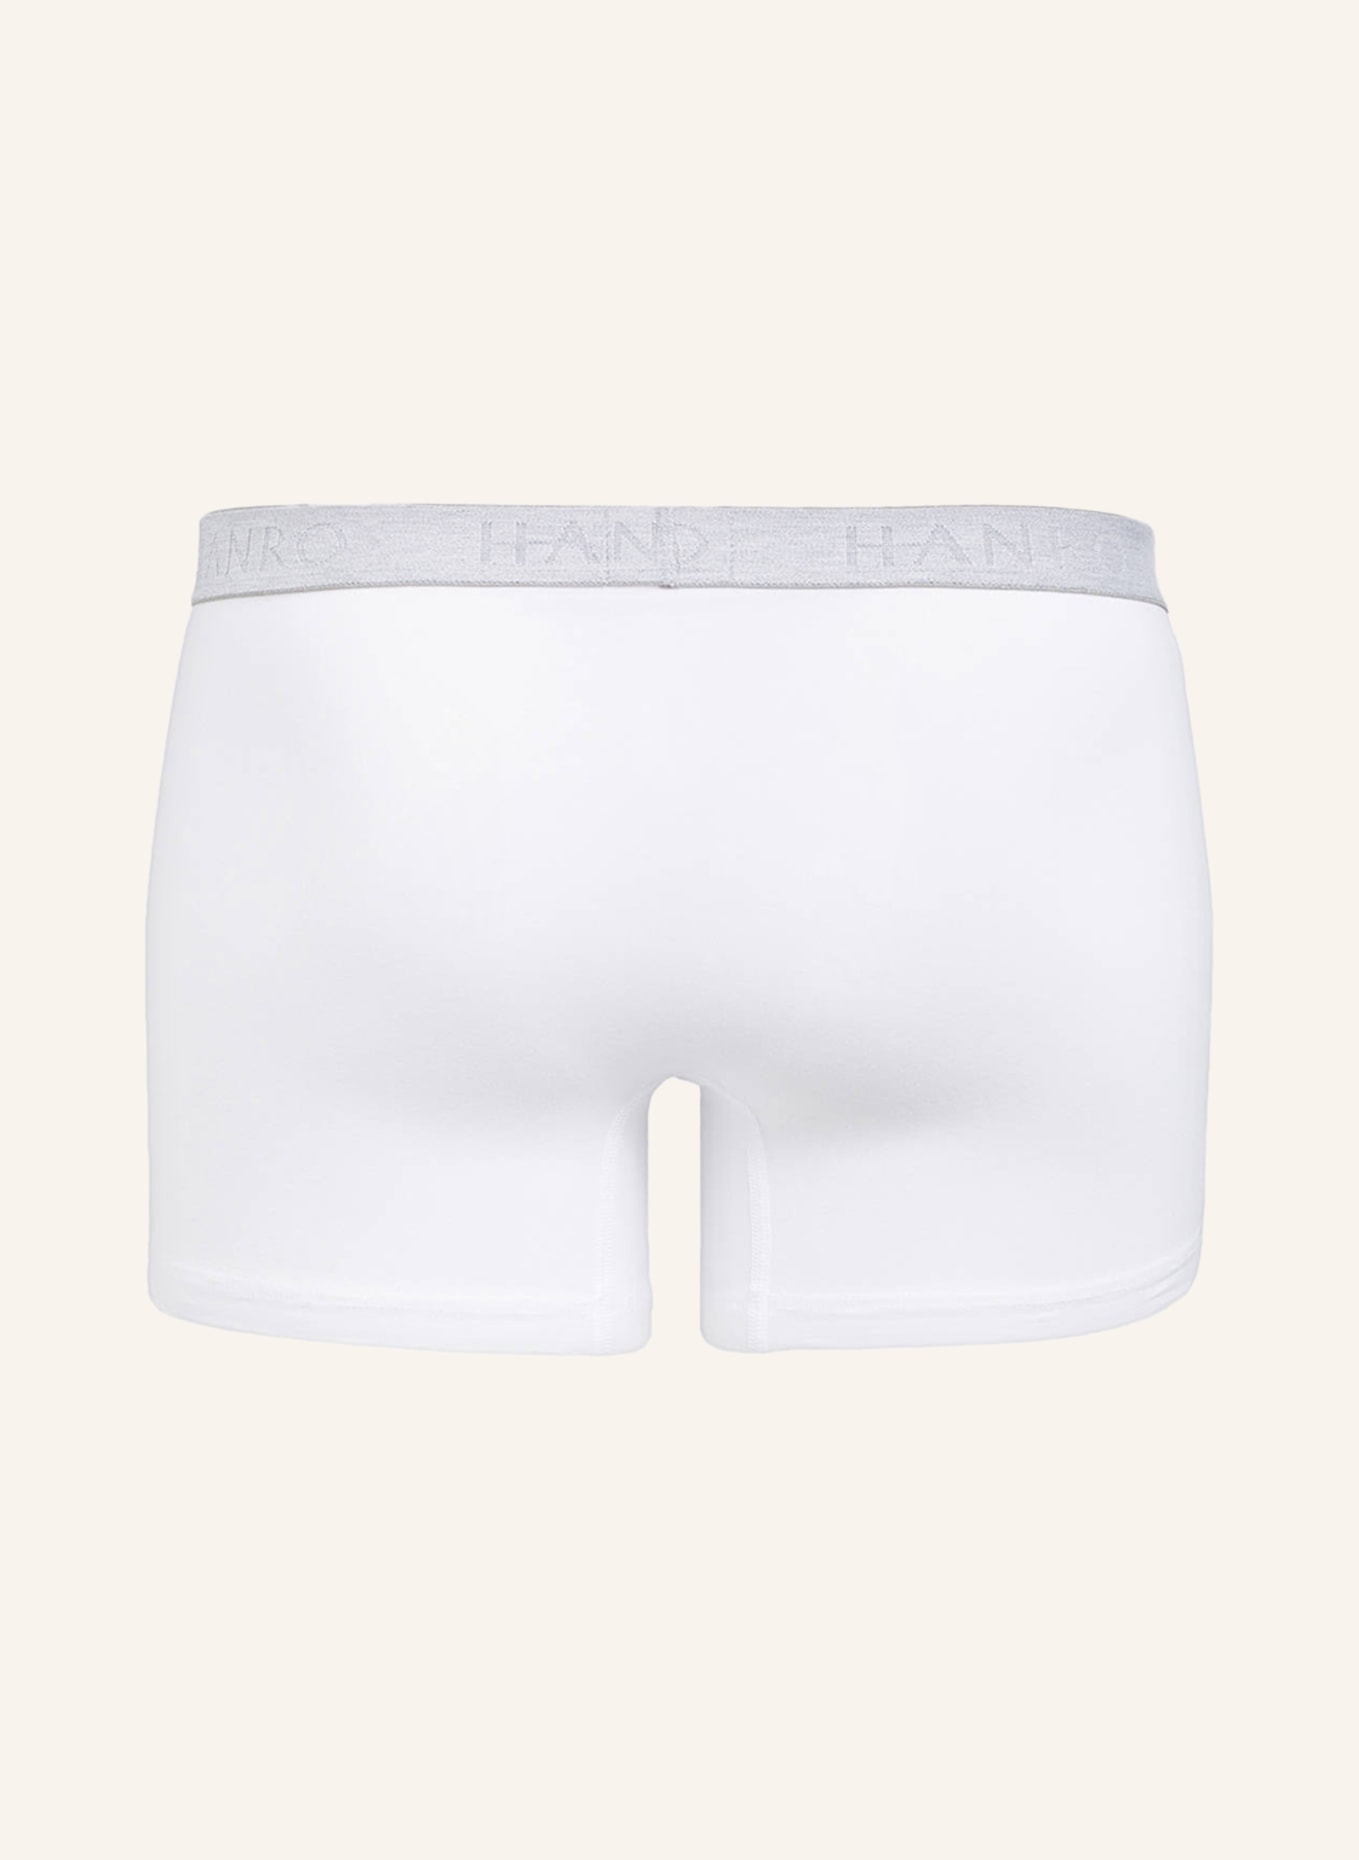 Puma Mens Boxers 2 Pack Basic Essential Underwear Cotton Elastane